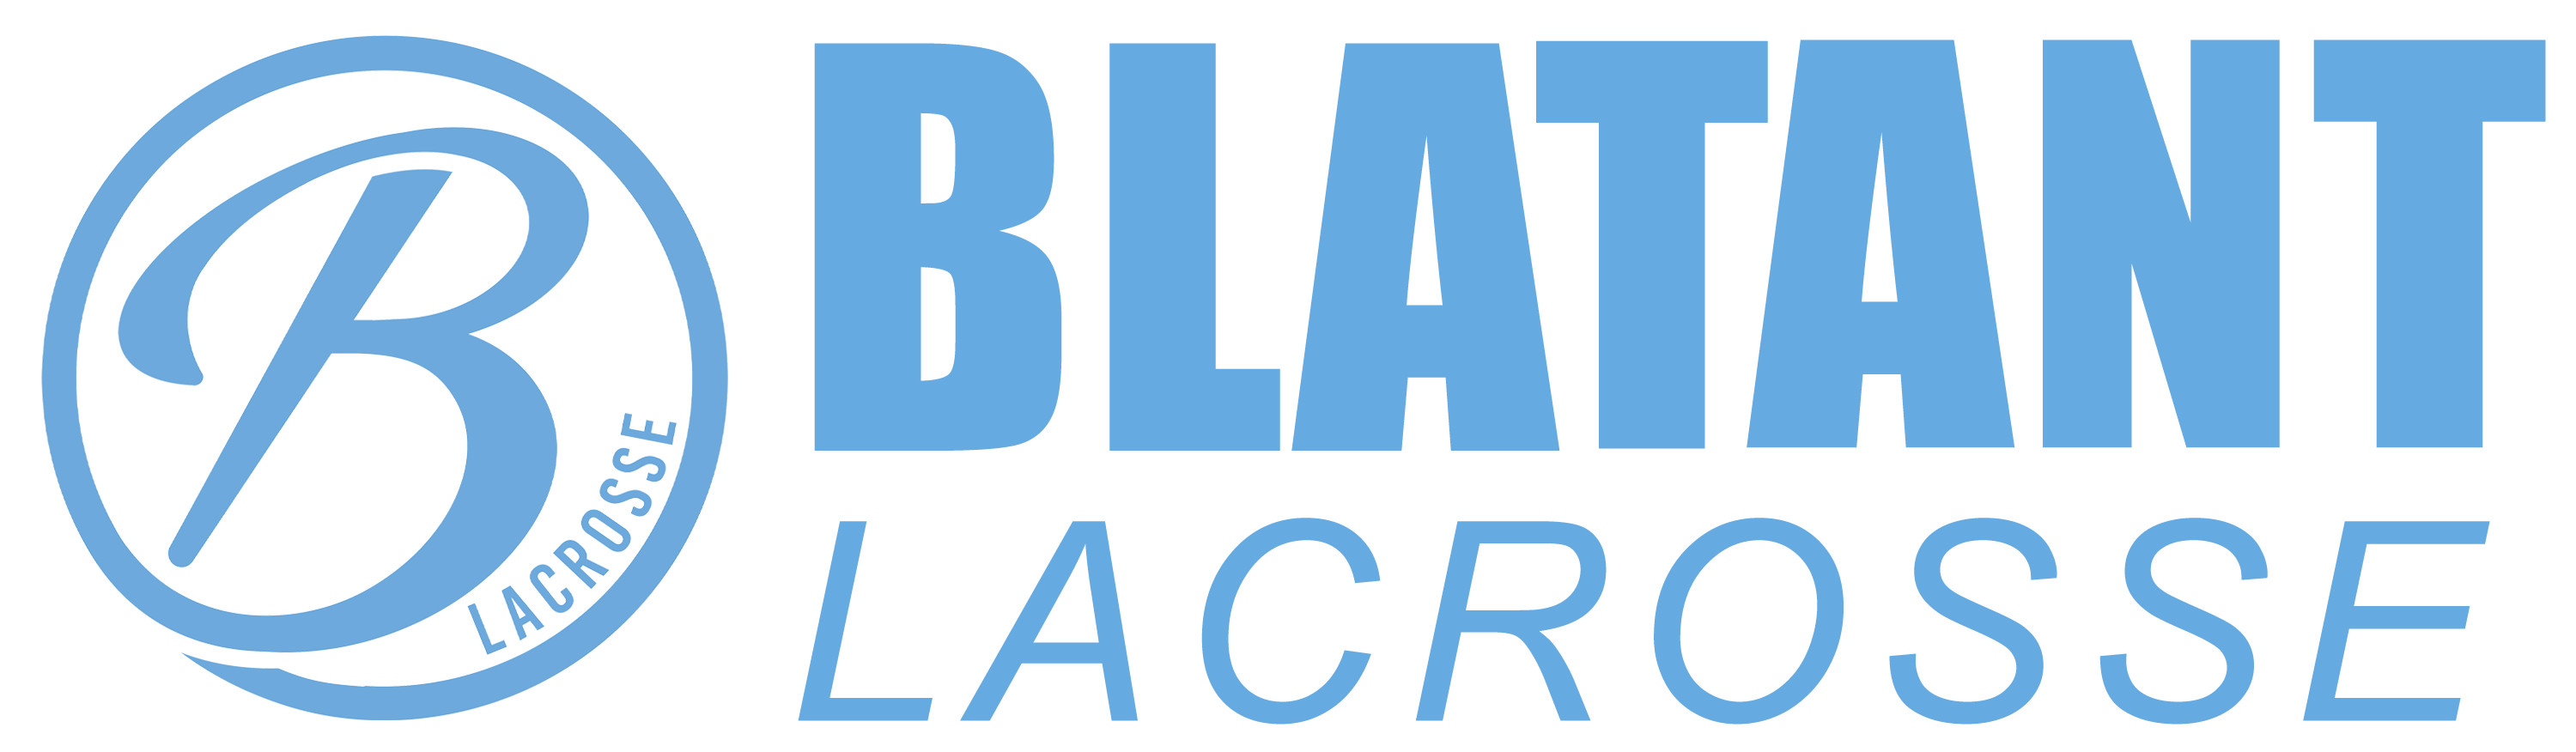 blatant-lacrosse-logo